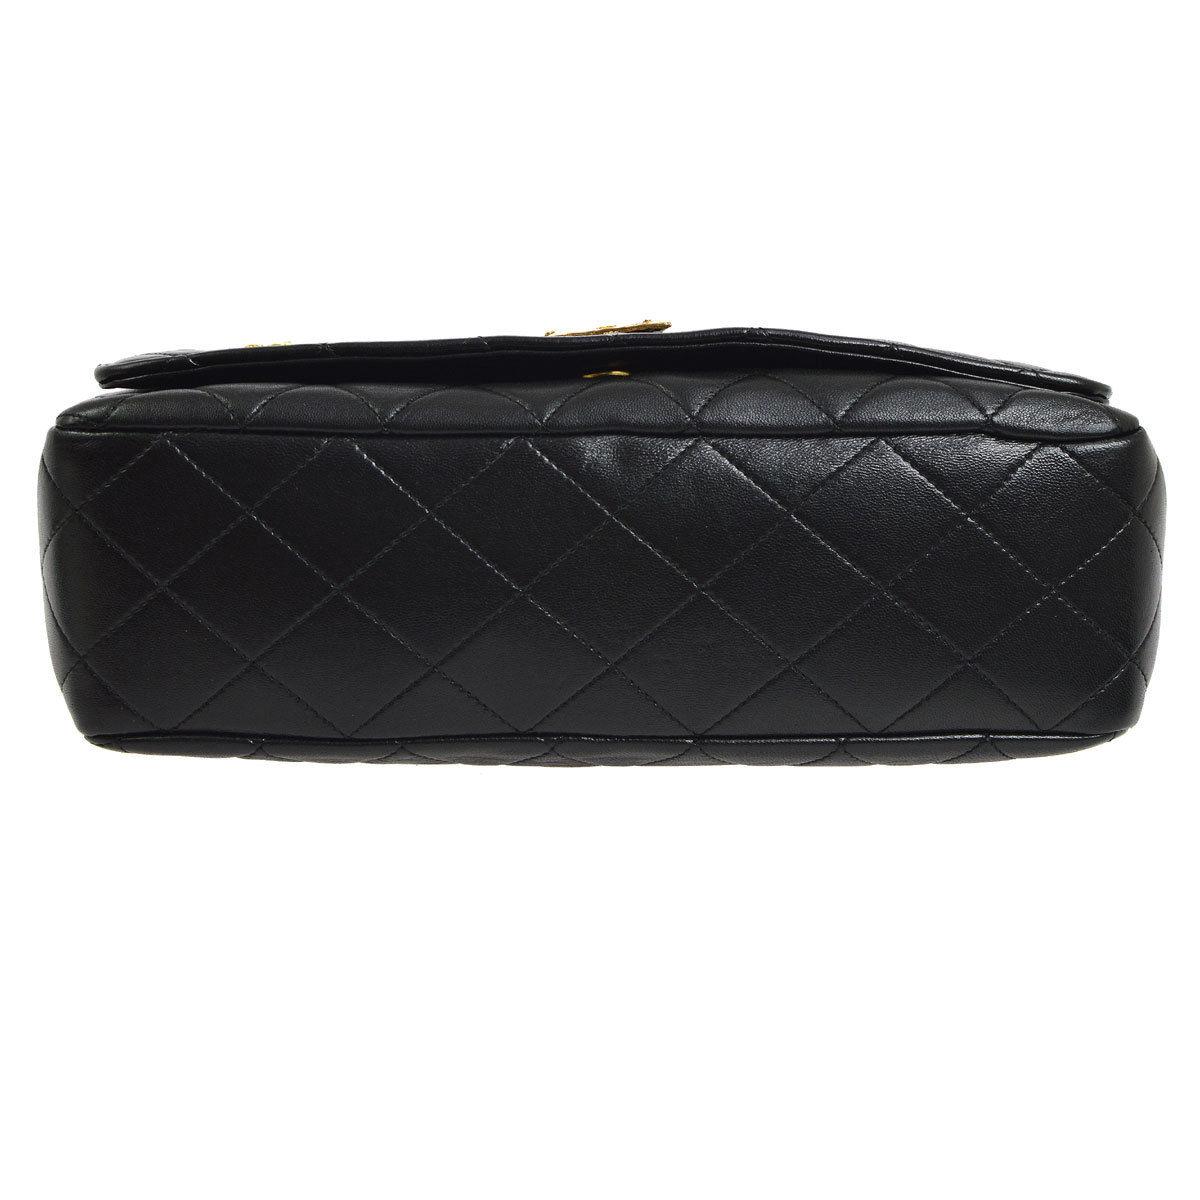 Women's Chanel Rare Large Black Leather Gold Charms Evening Shoulder Flap Bag